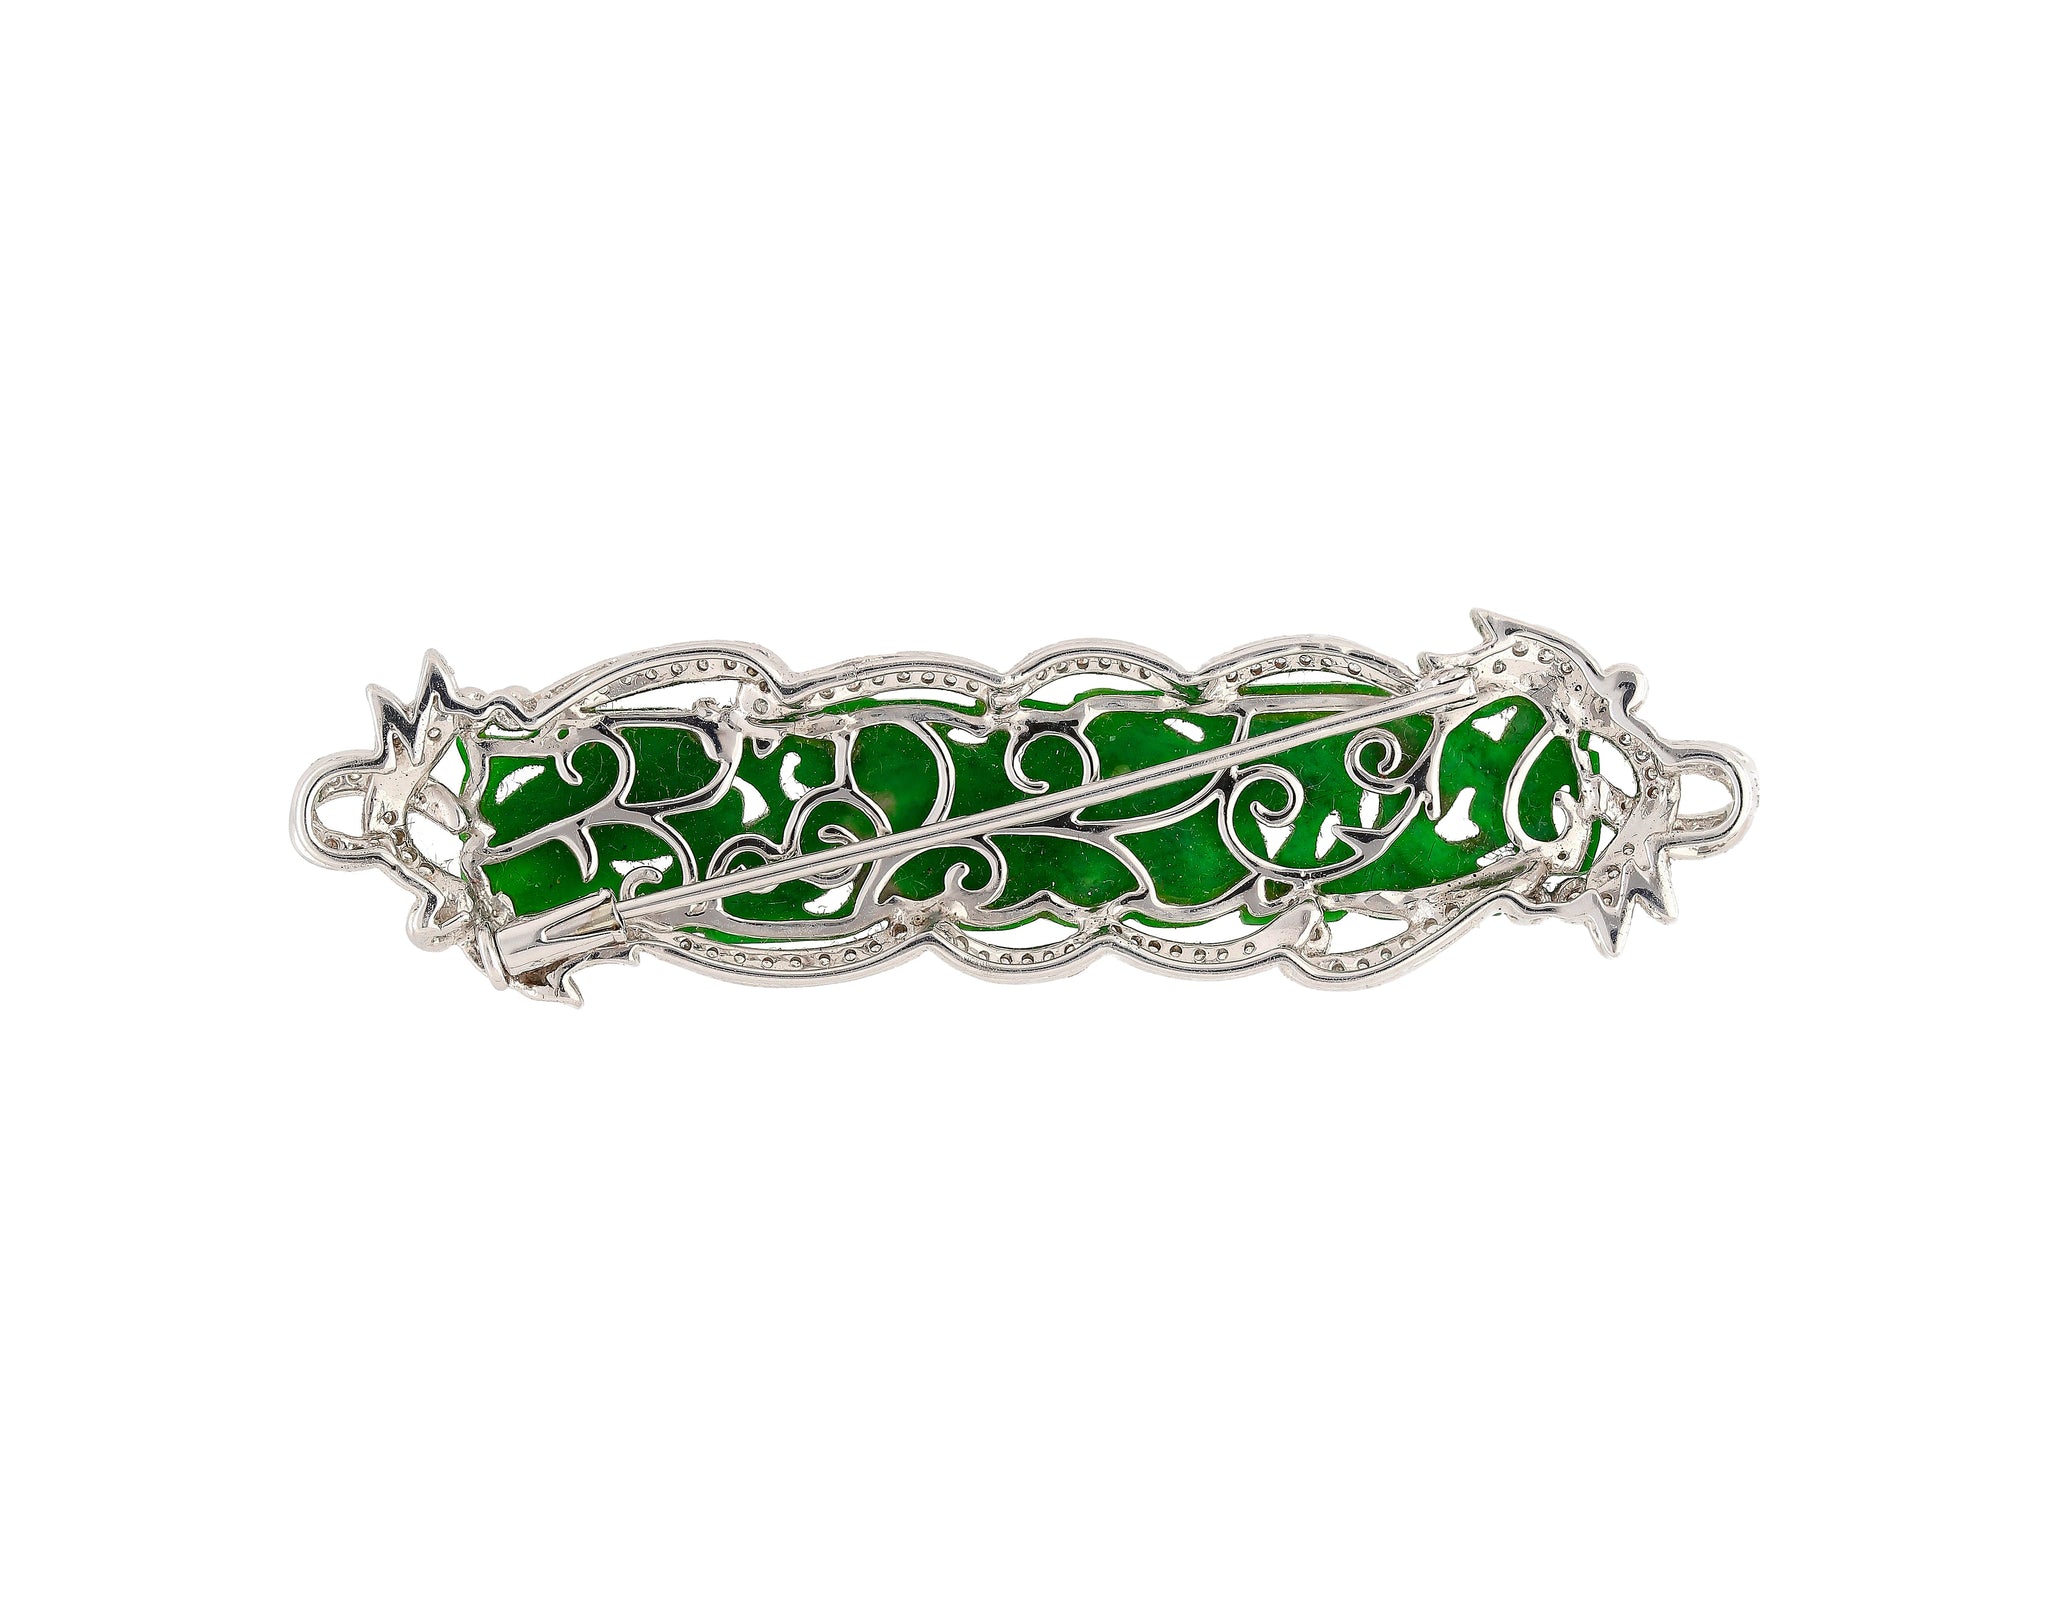 18.20 Carat Carved Dragon Green Jadeite Jade Grade "A" & Diamonds Pendant & Pin Crossover